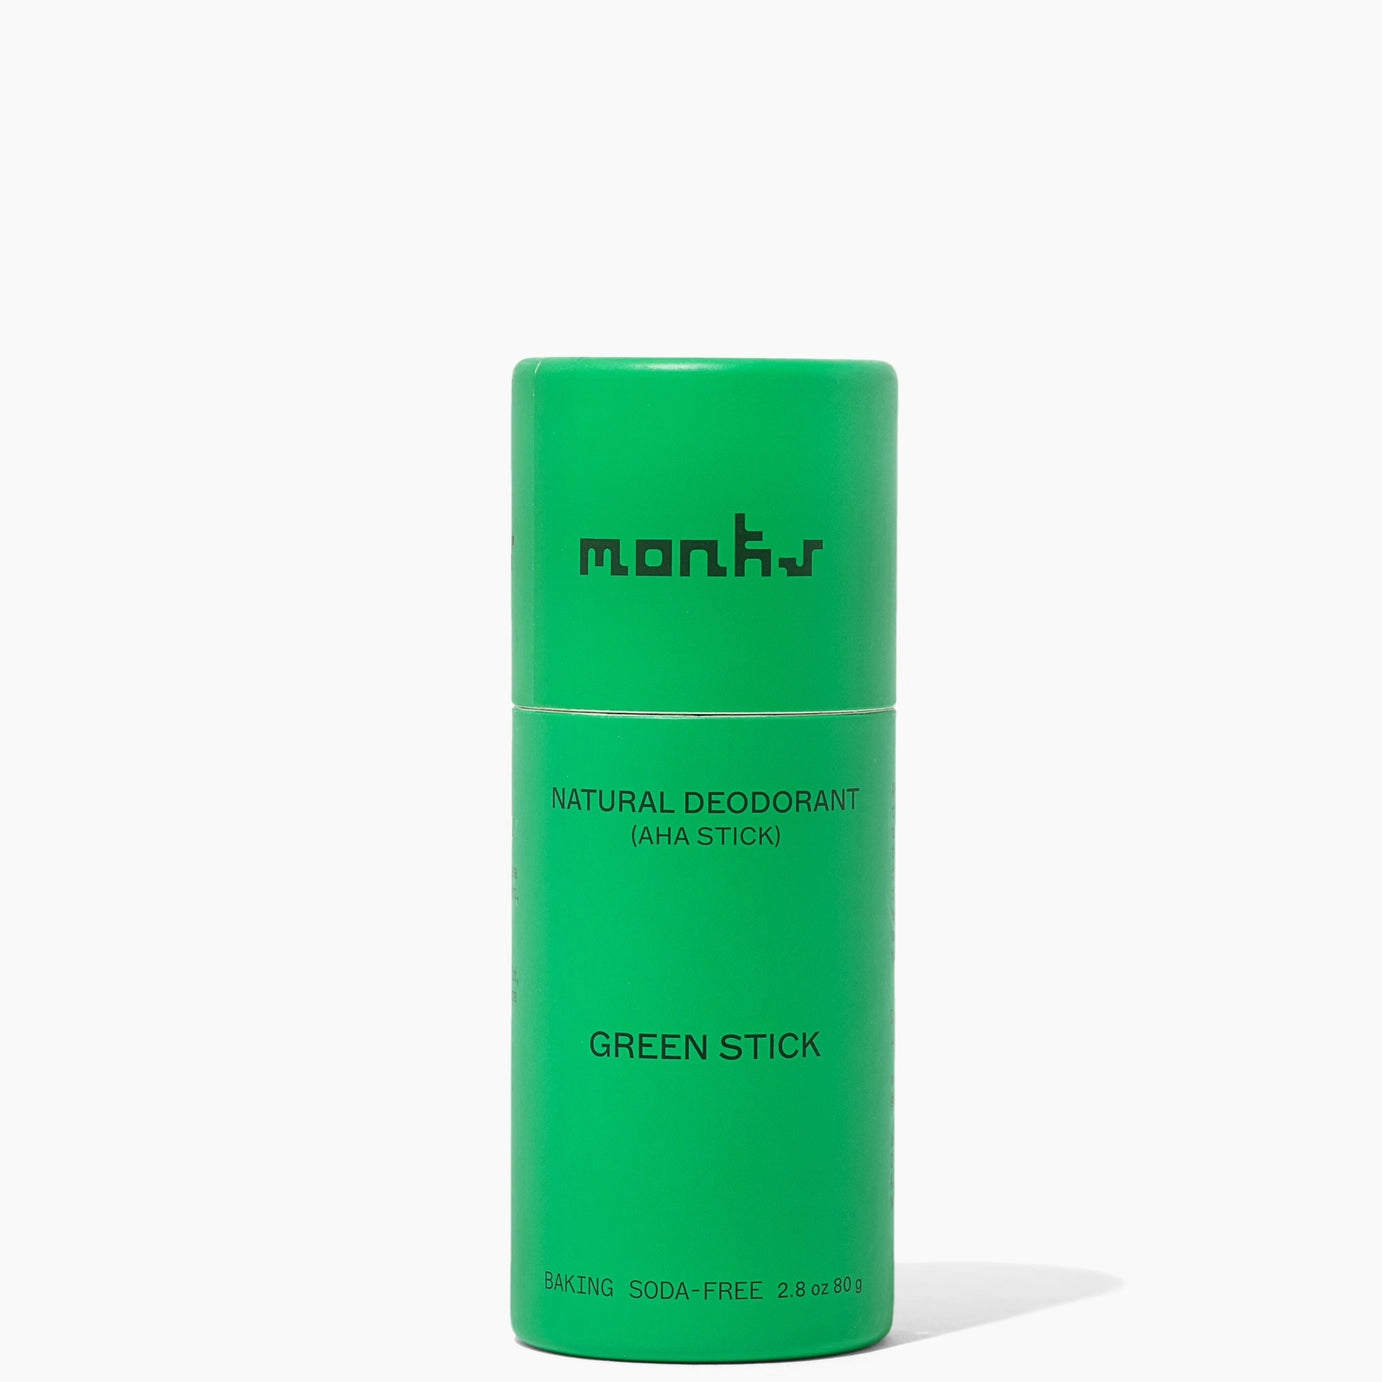 MONKS - Natural deodorant